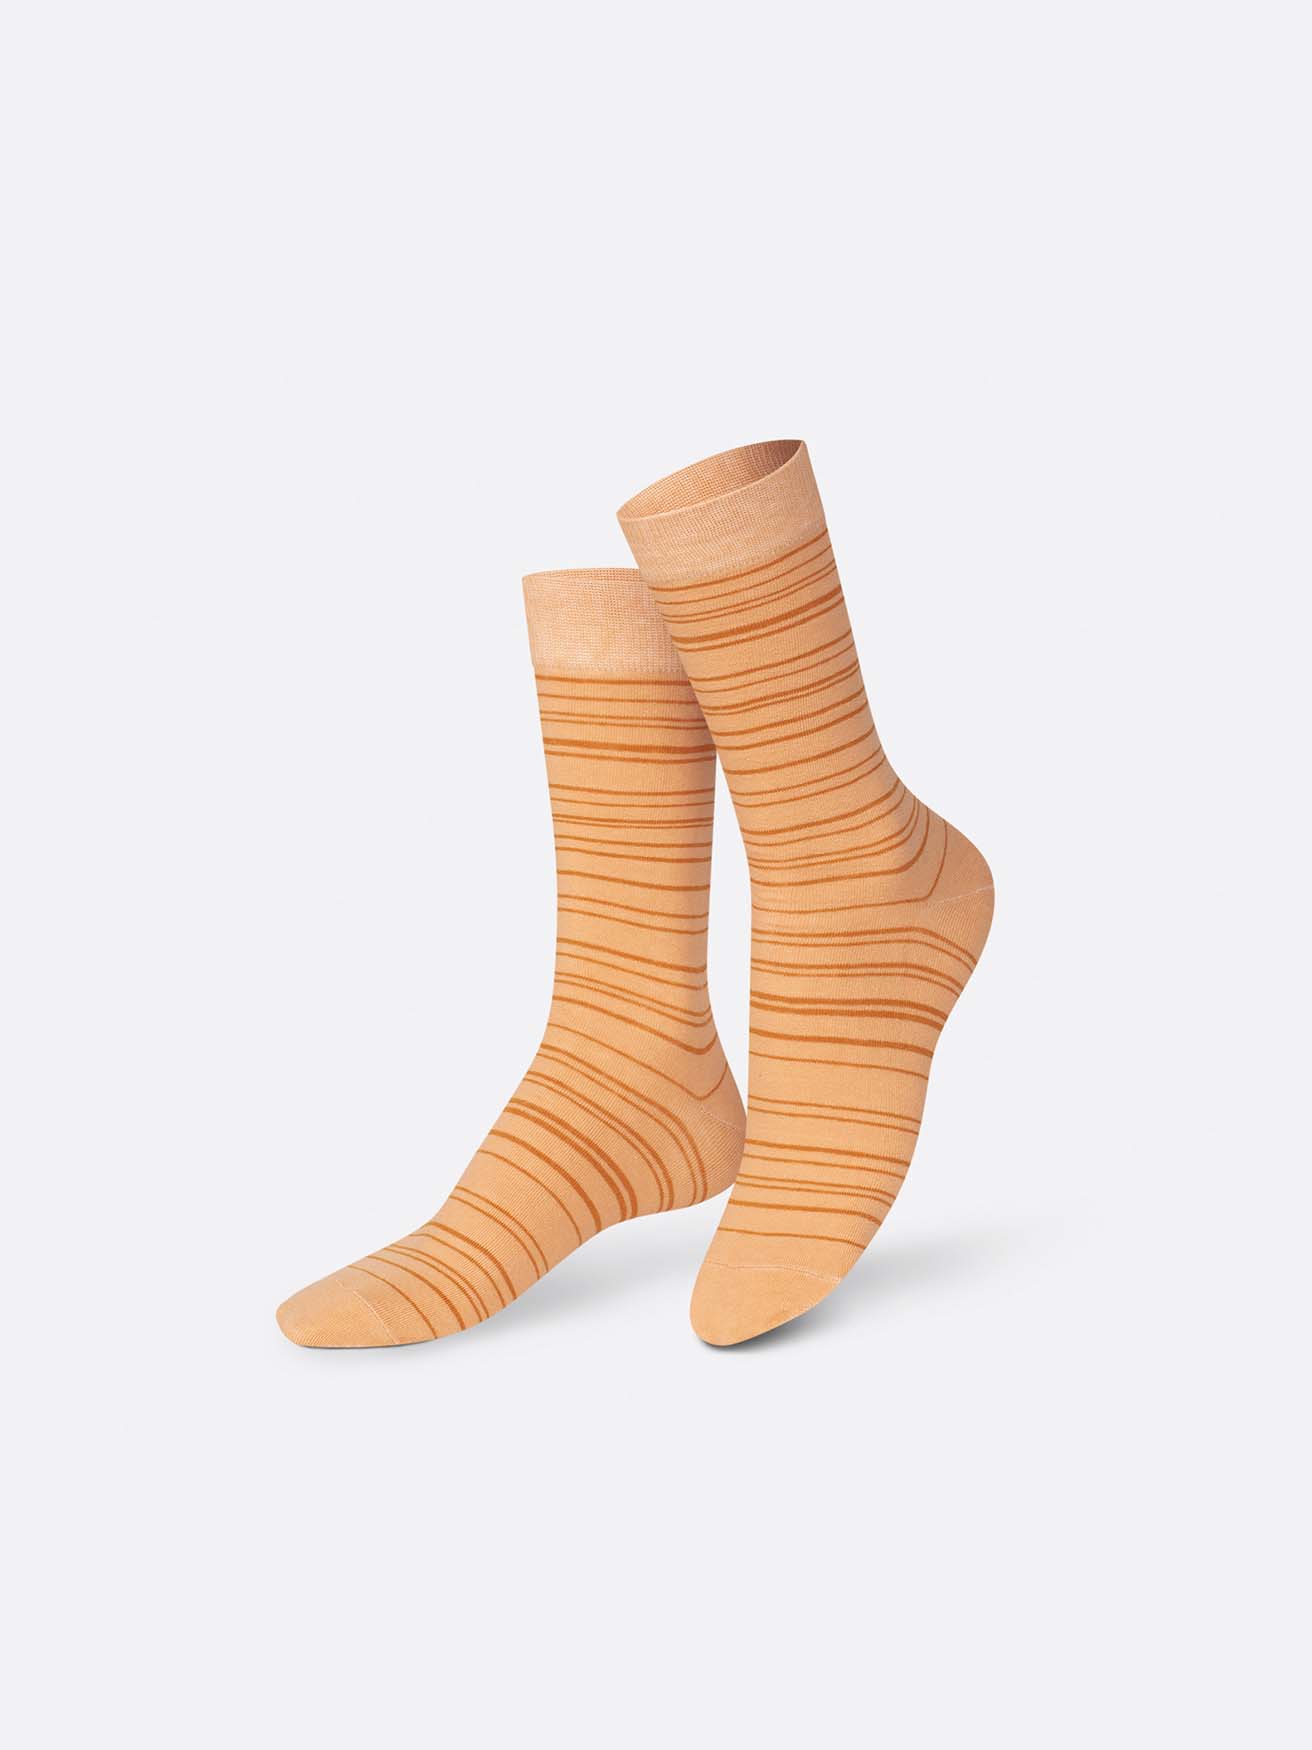 Eat My Socks – Bon Croissant Socks